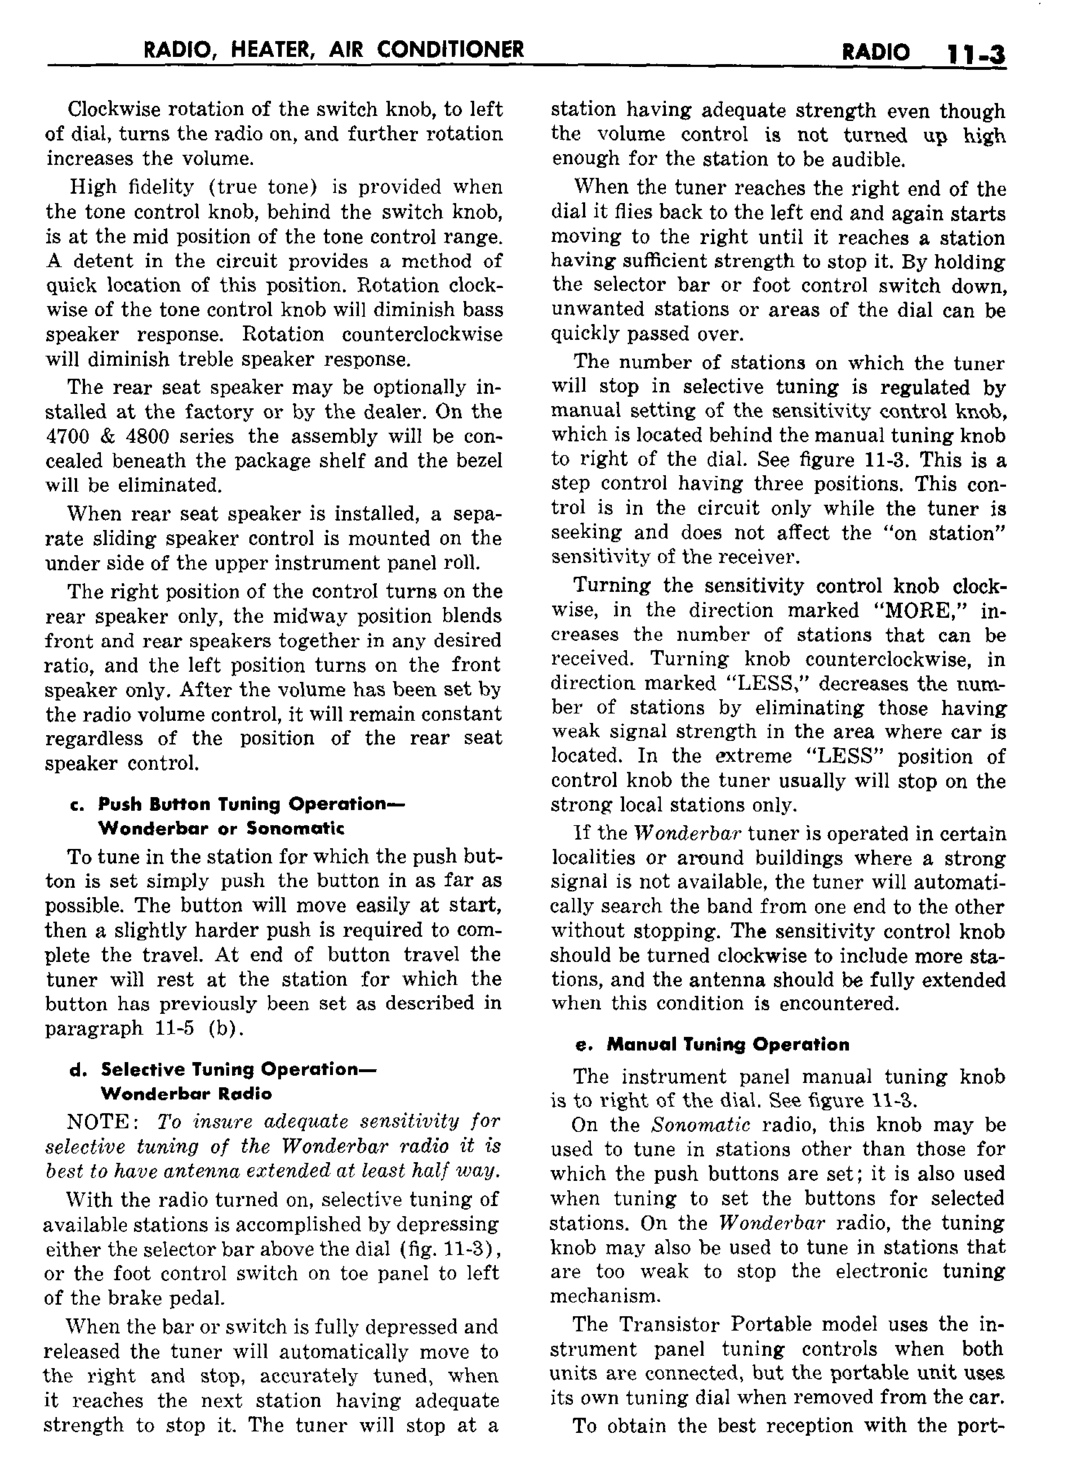 n_12 1959 Buick Shop Manual - Radio-Heater-AC-003-003.jpg